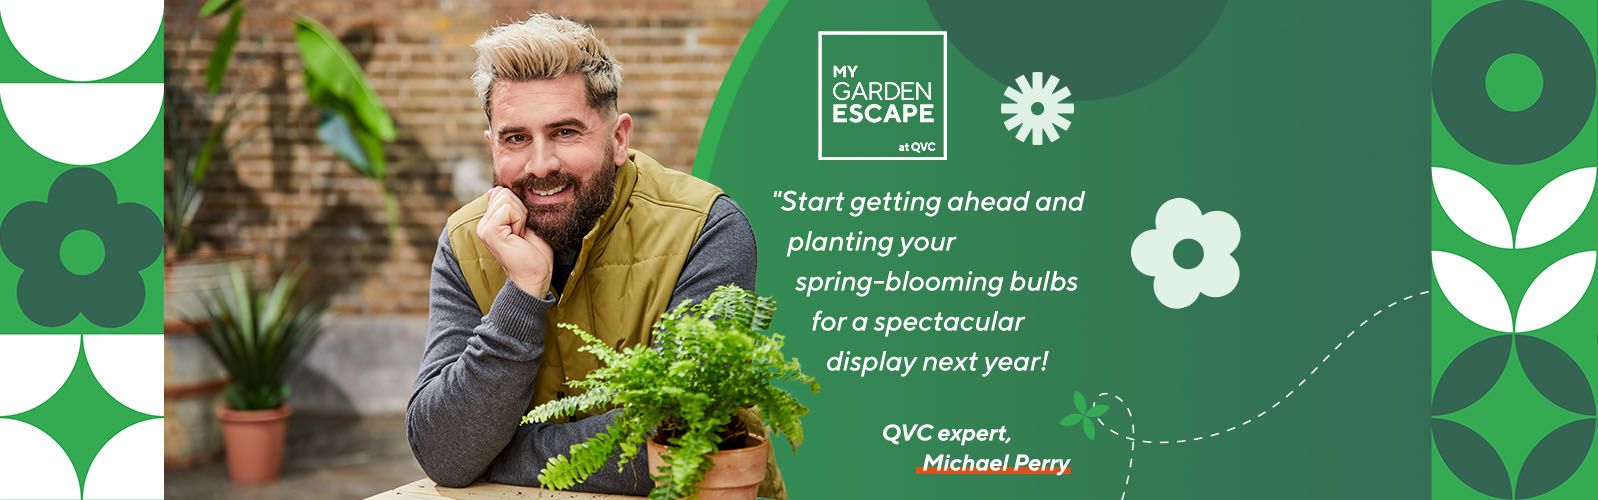 Gardening expert Michael Perry